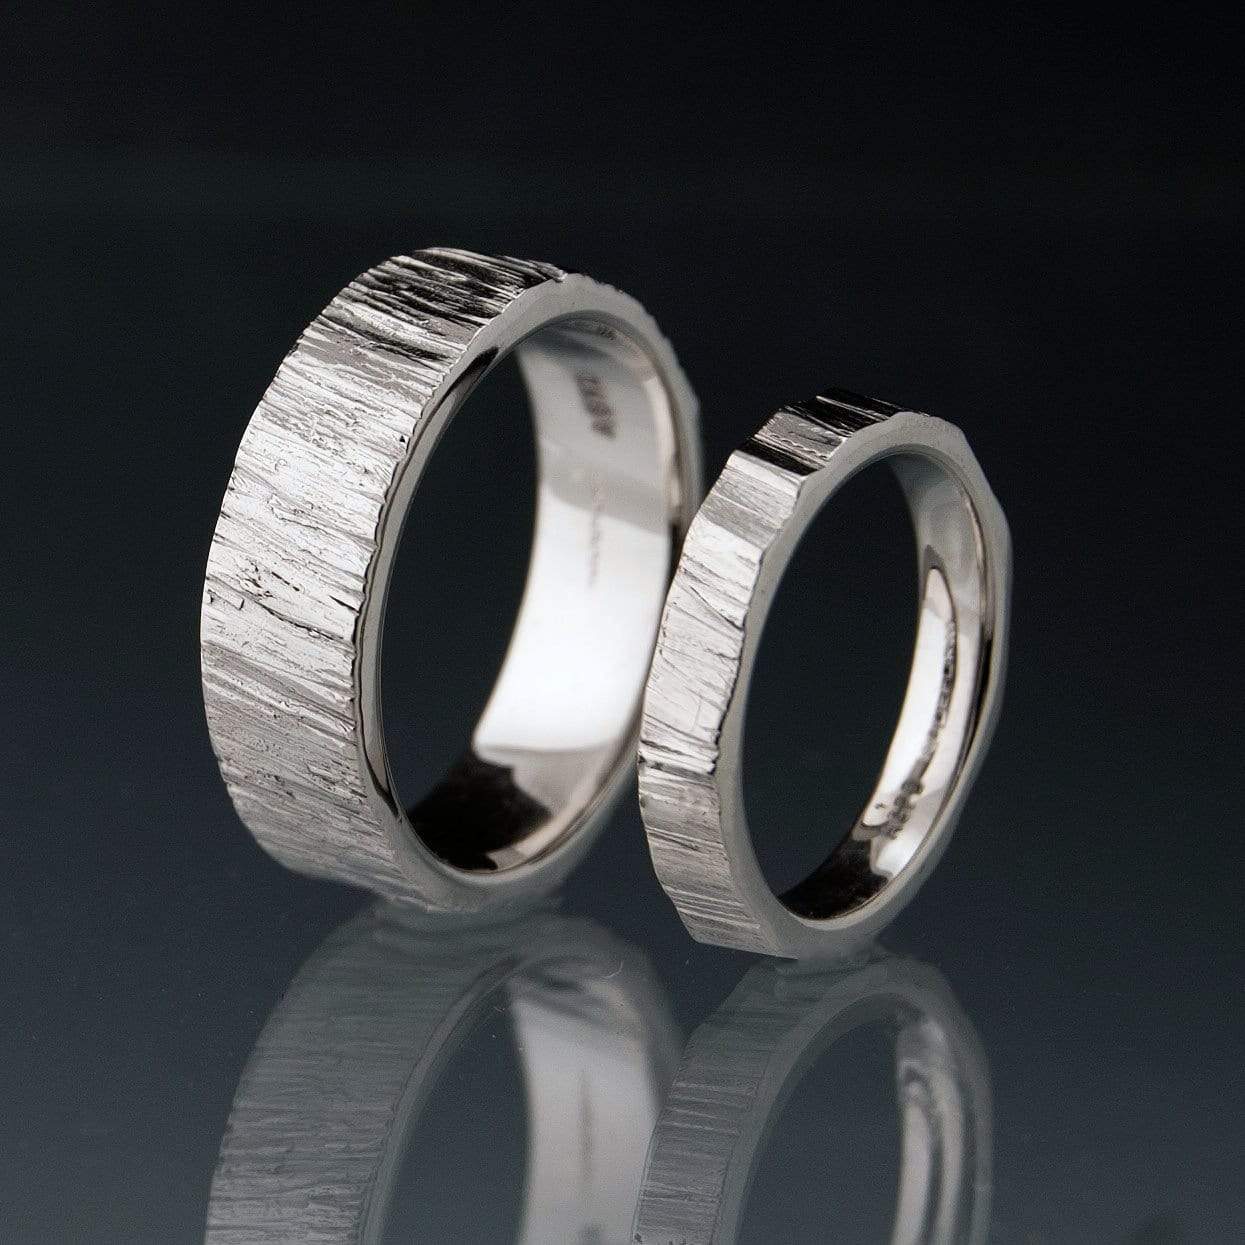 Narrow Saw Cut Texture Wedding Band Ring by Nodeform